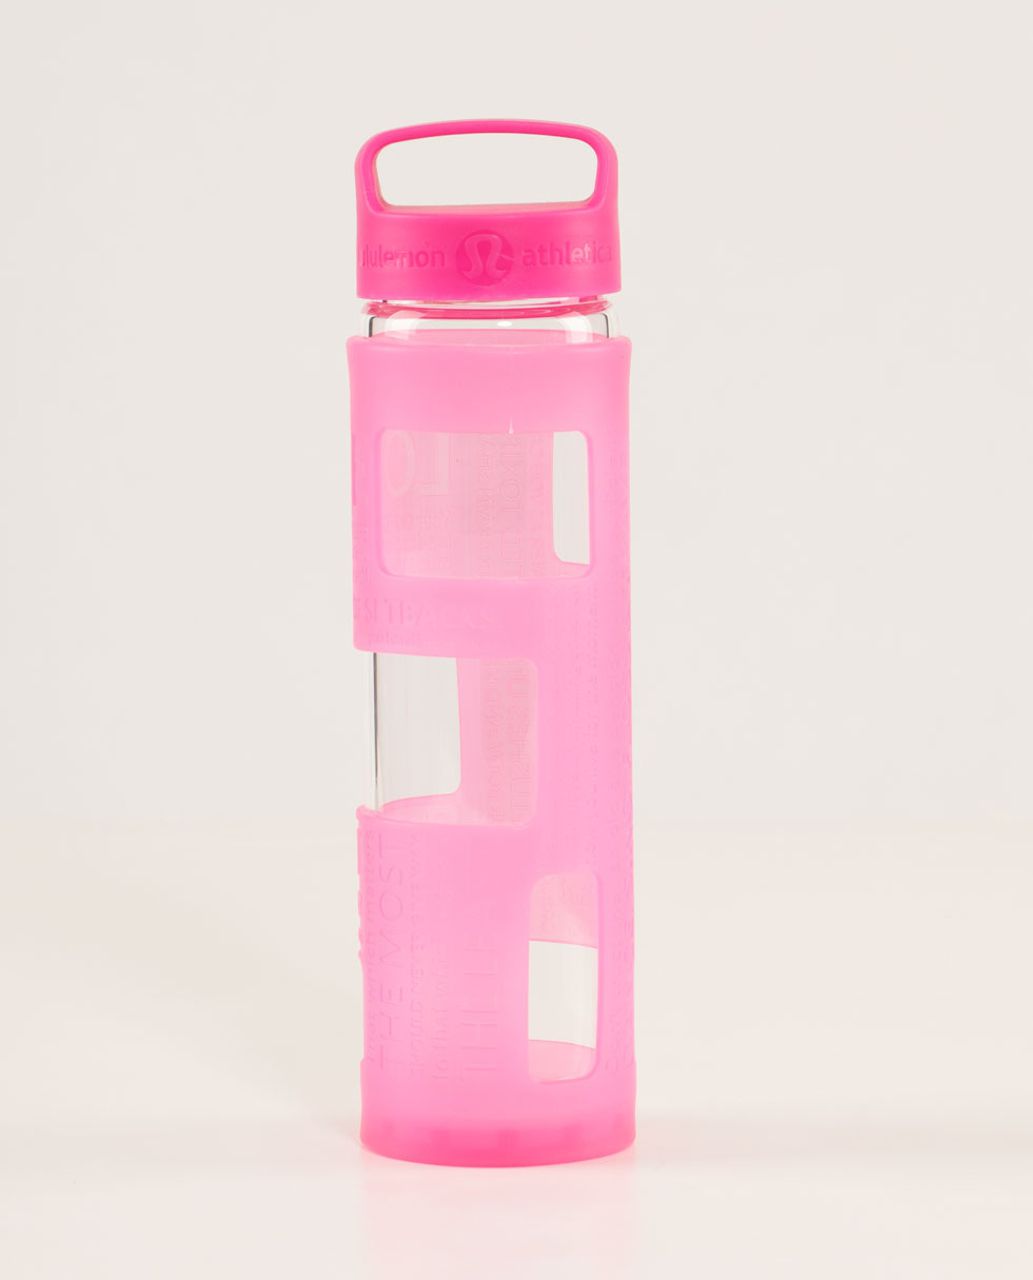 Lululemon Pure Balance Water Bottle